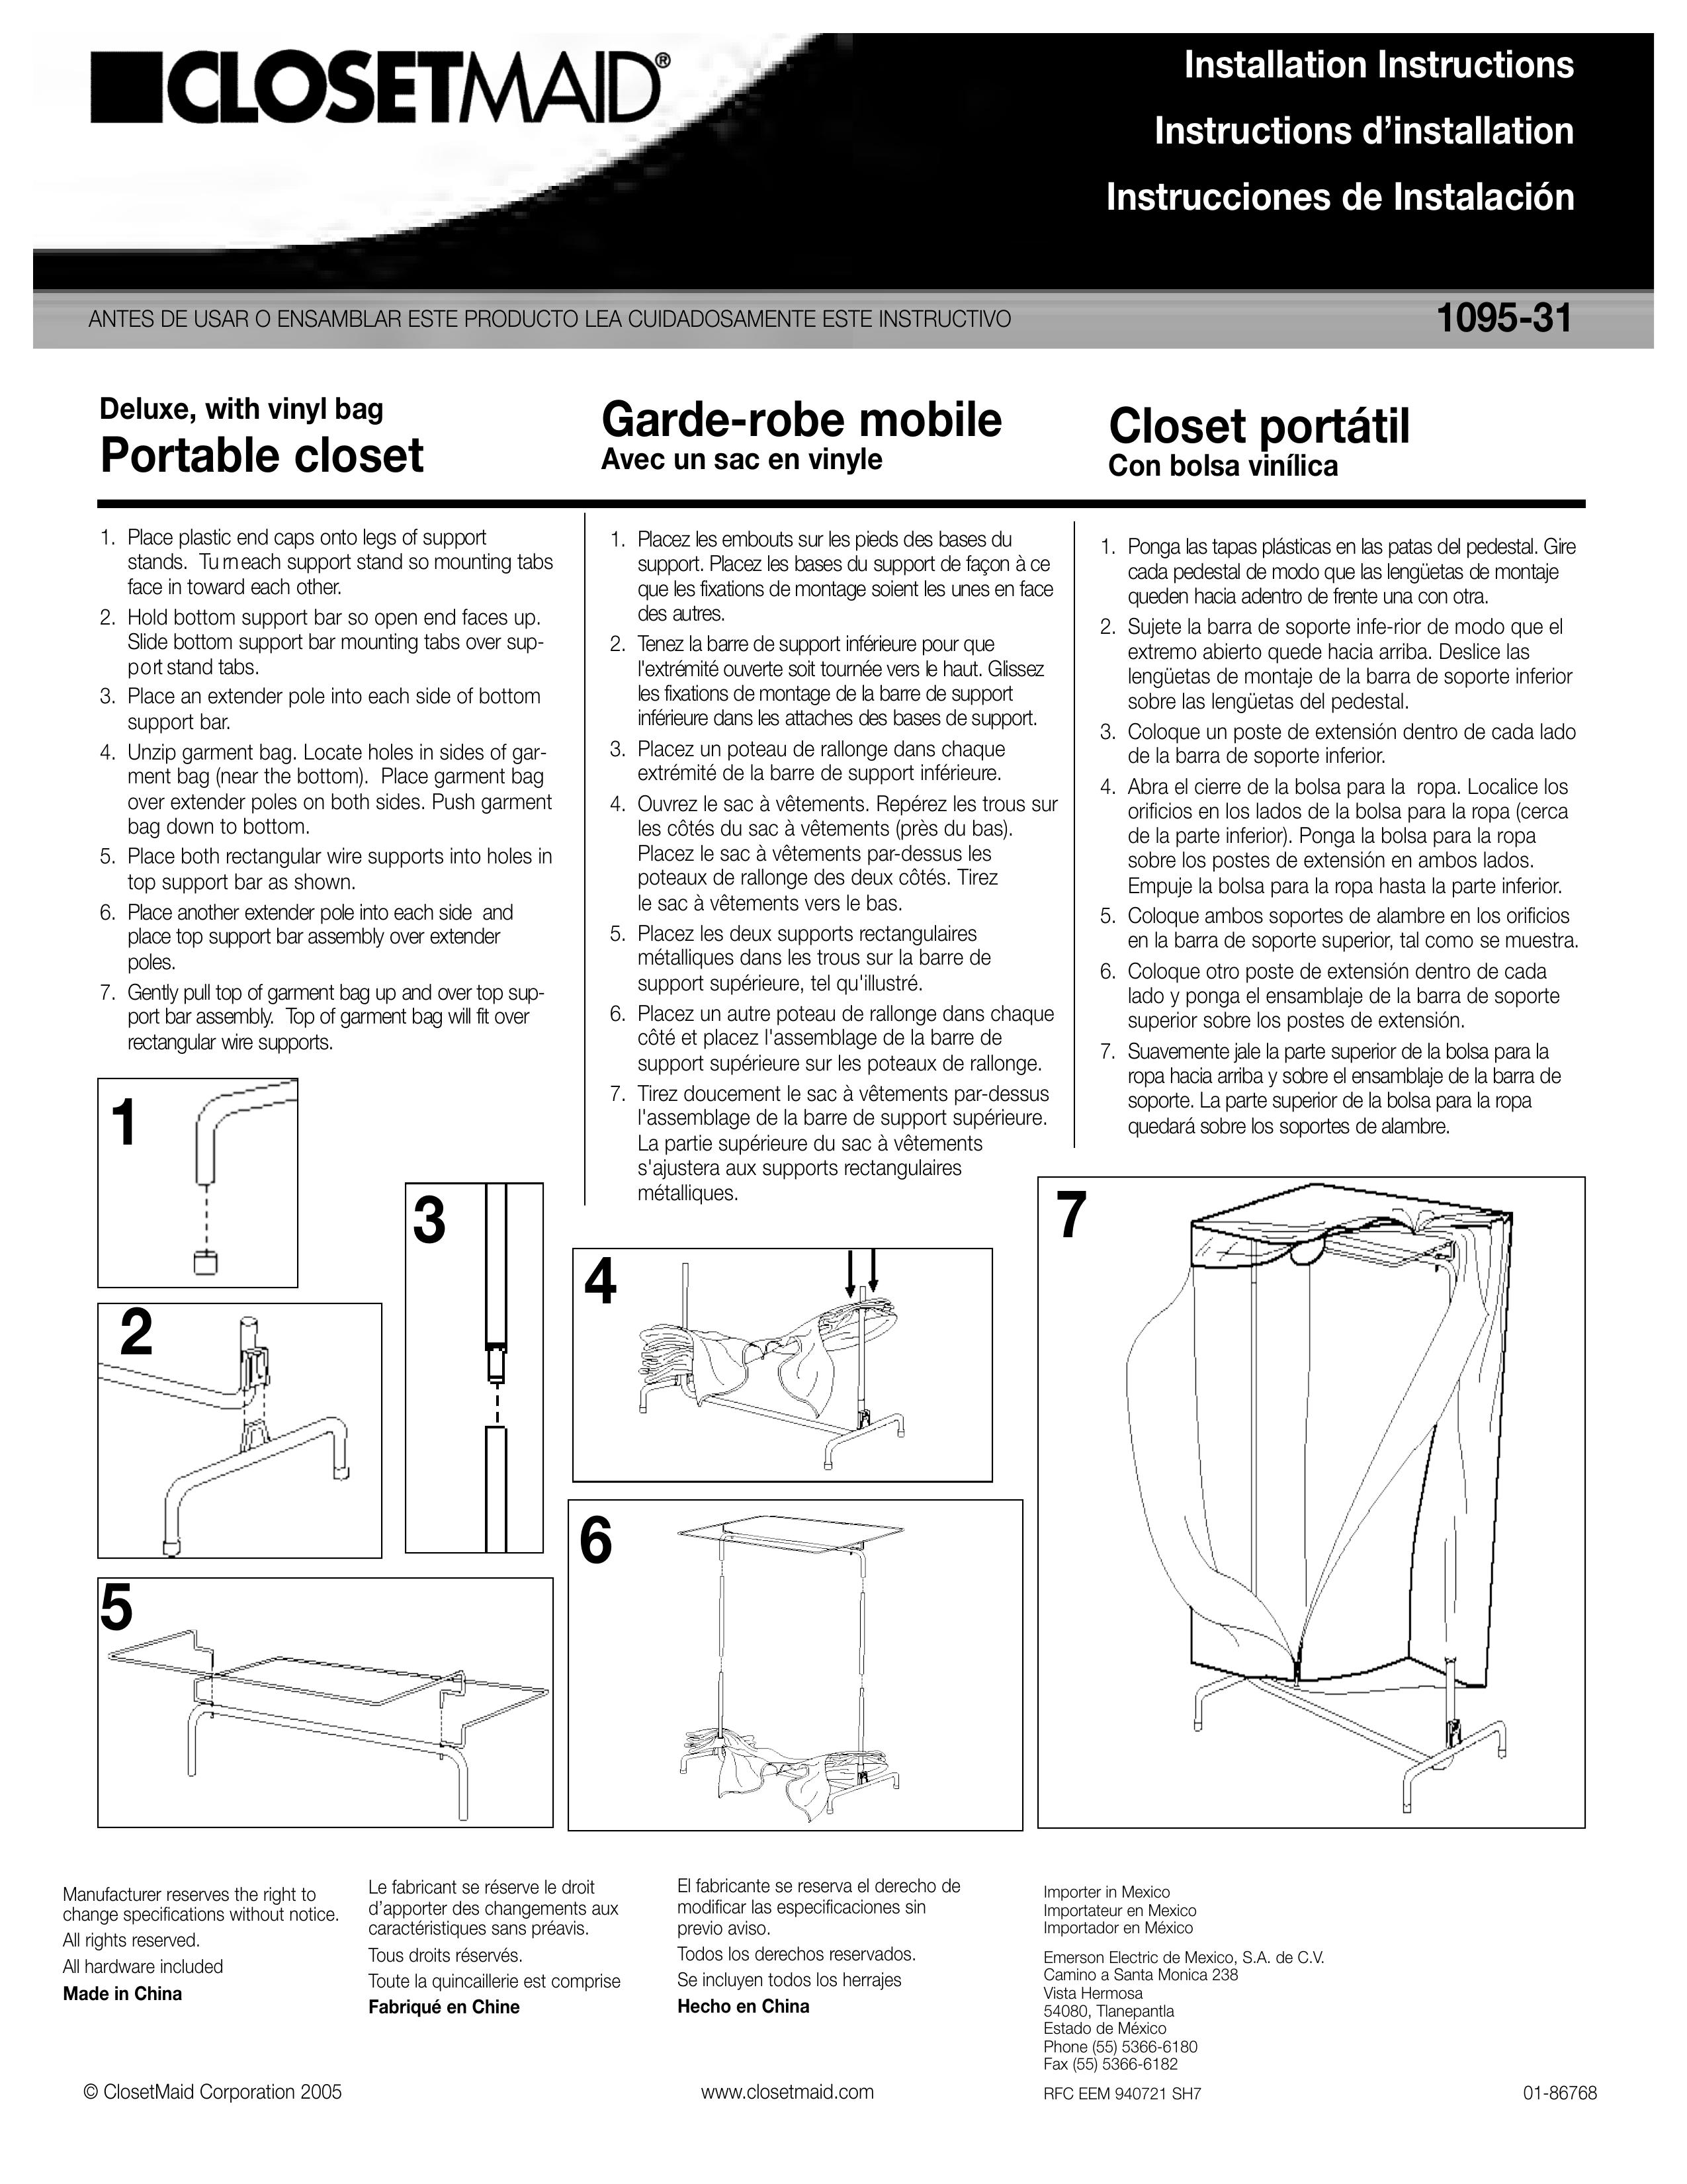 Closet Maid 1095-31 Outdoor Storage User Manual